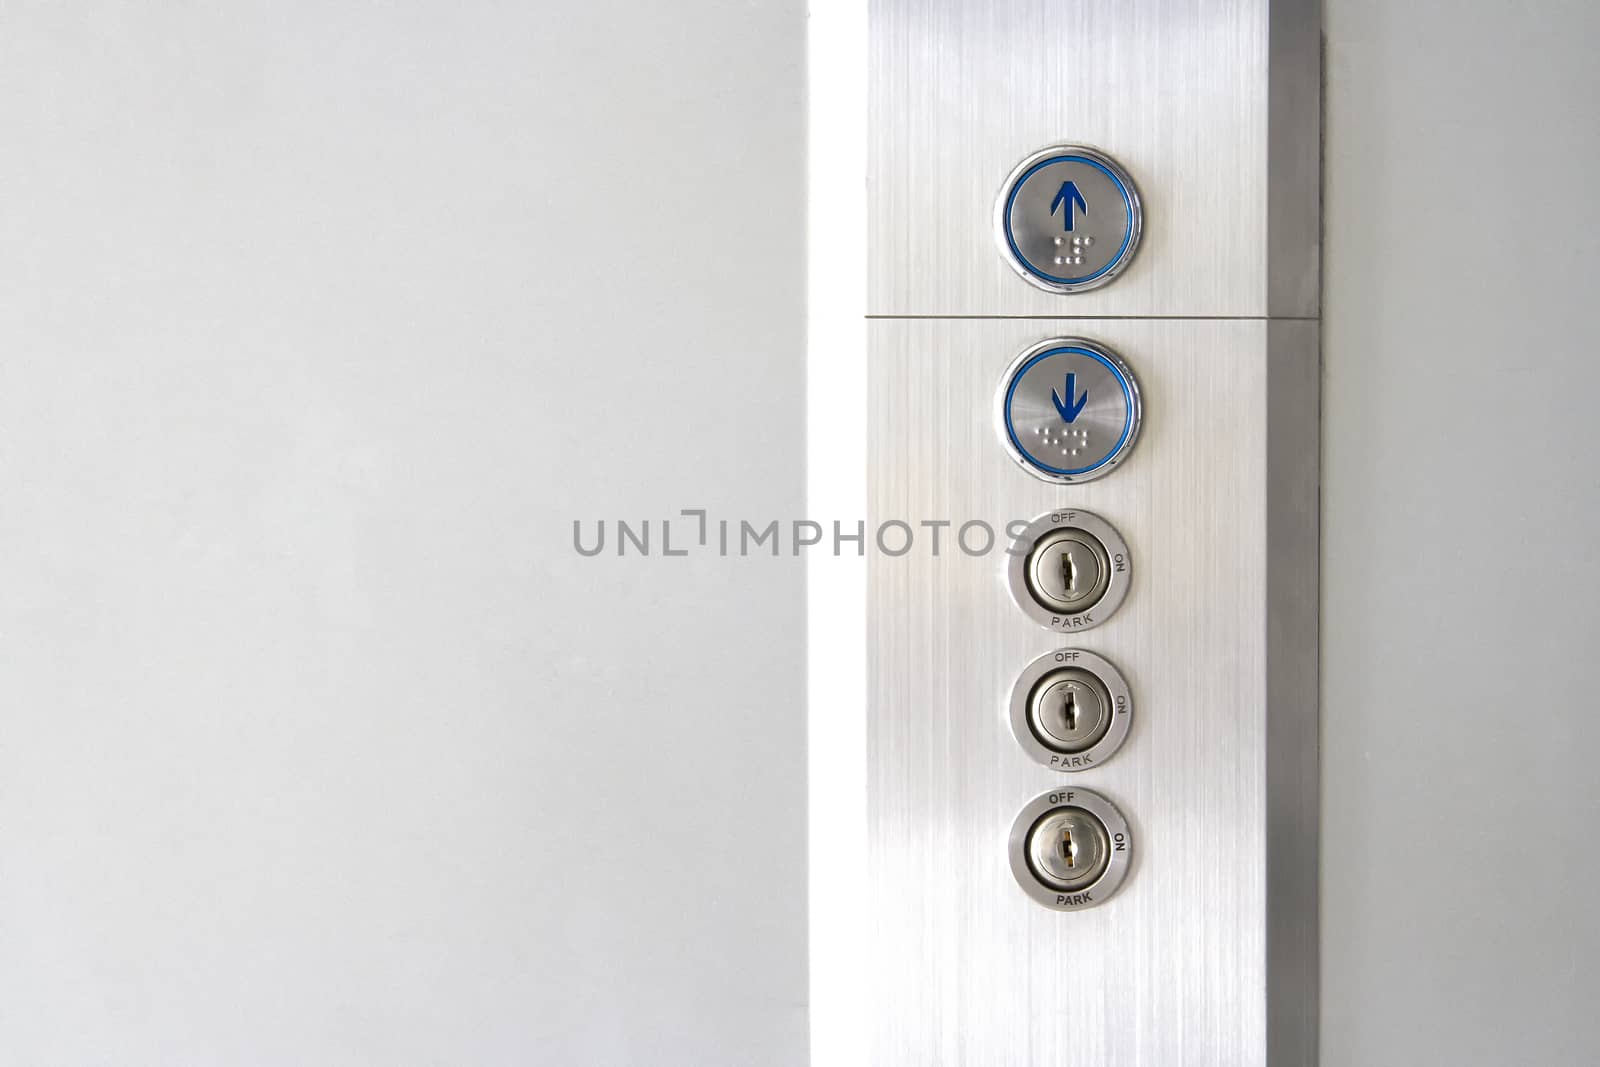 Press the elevator up and keypad elevator 